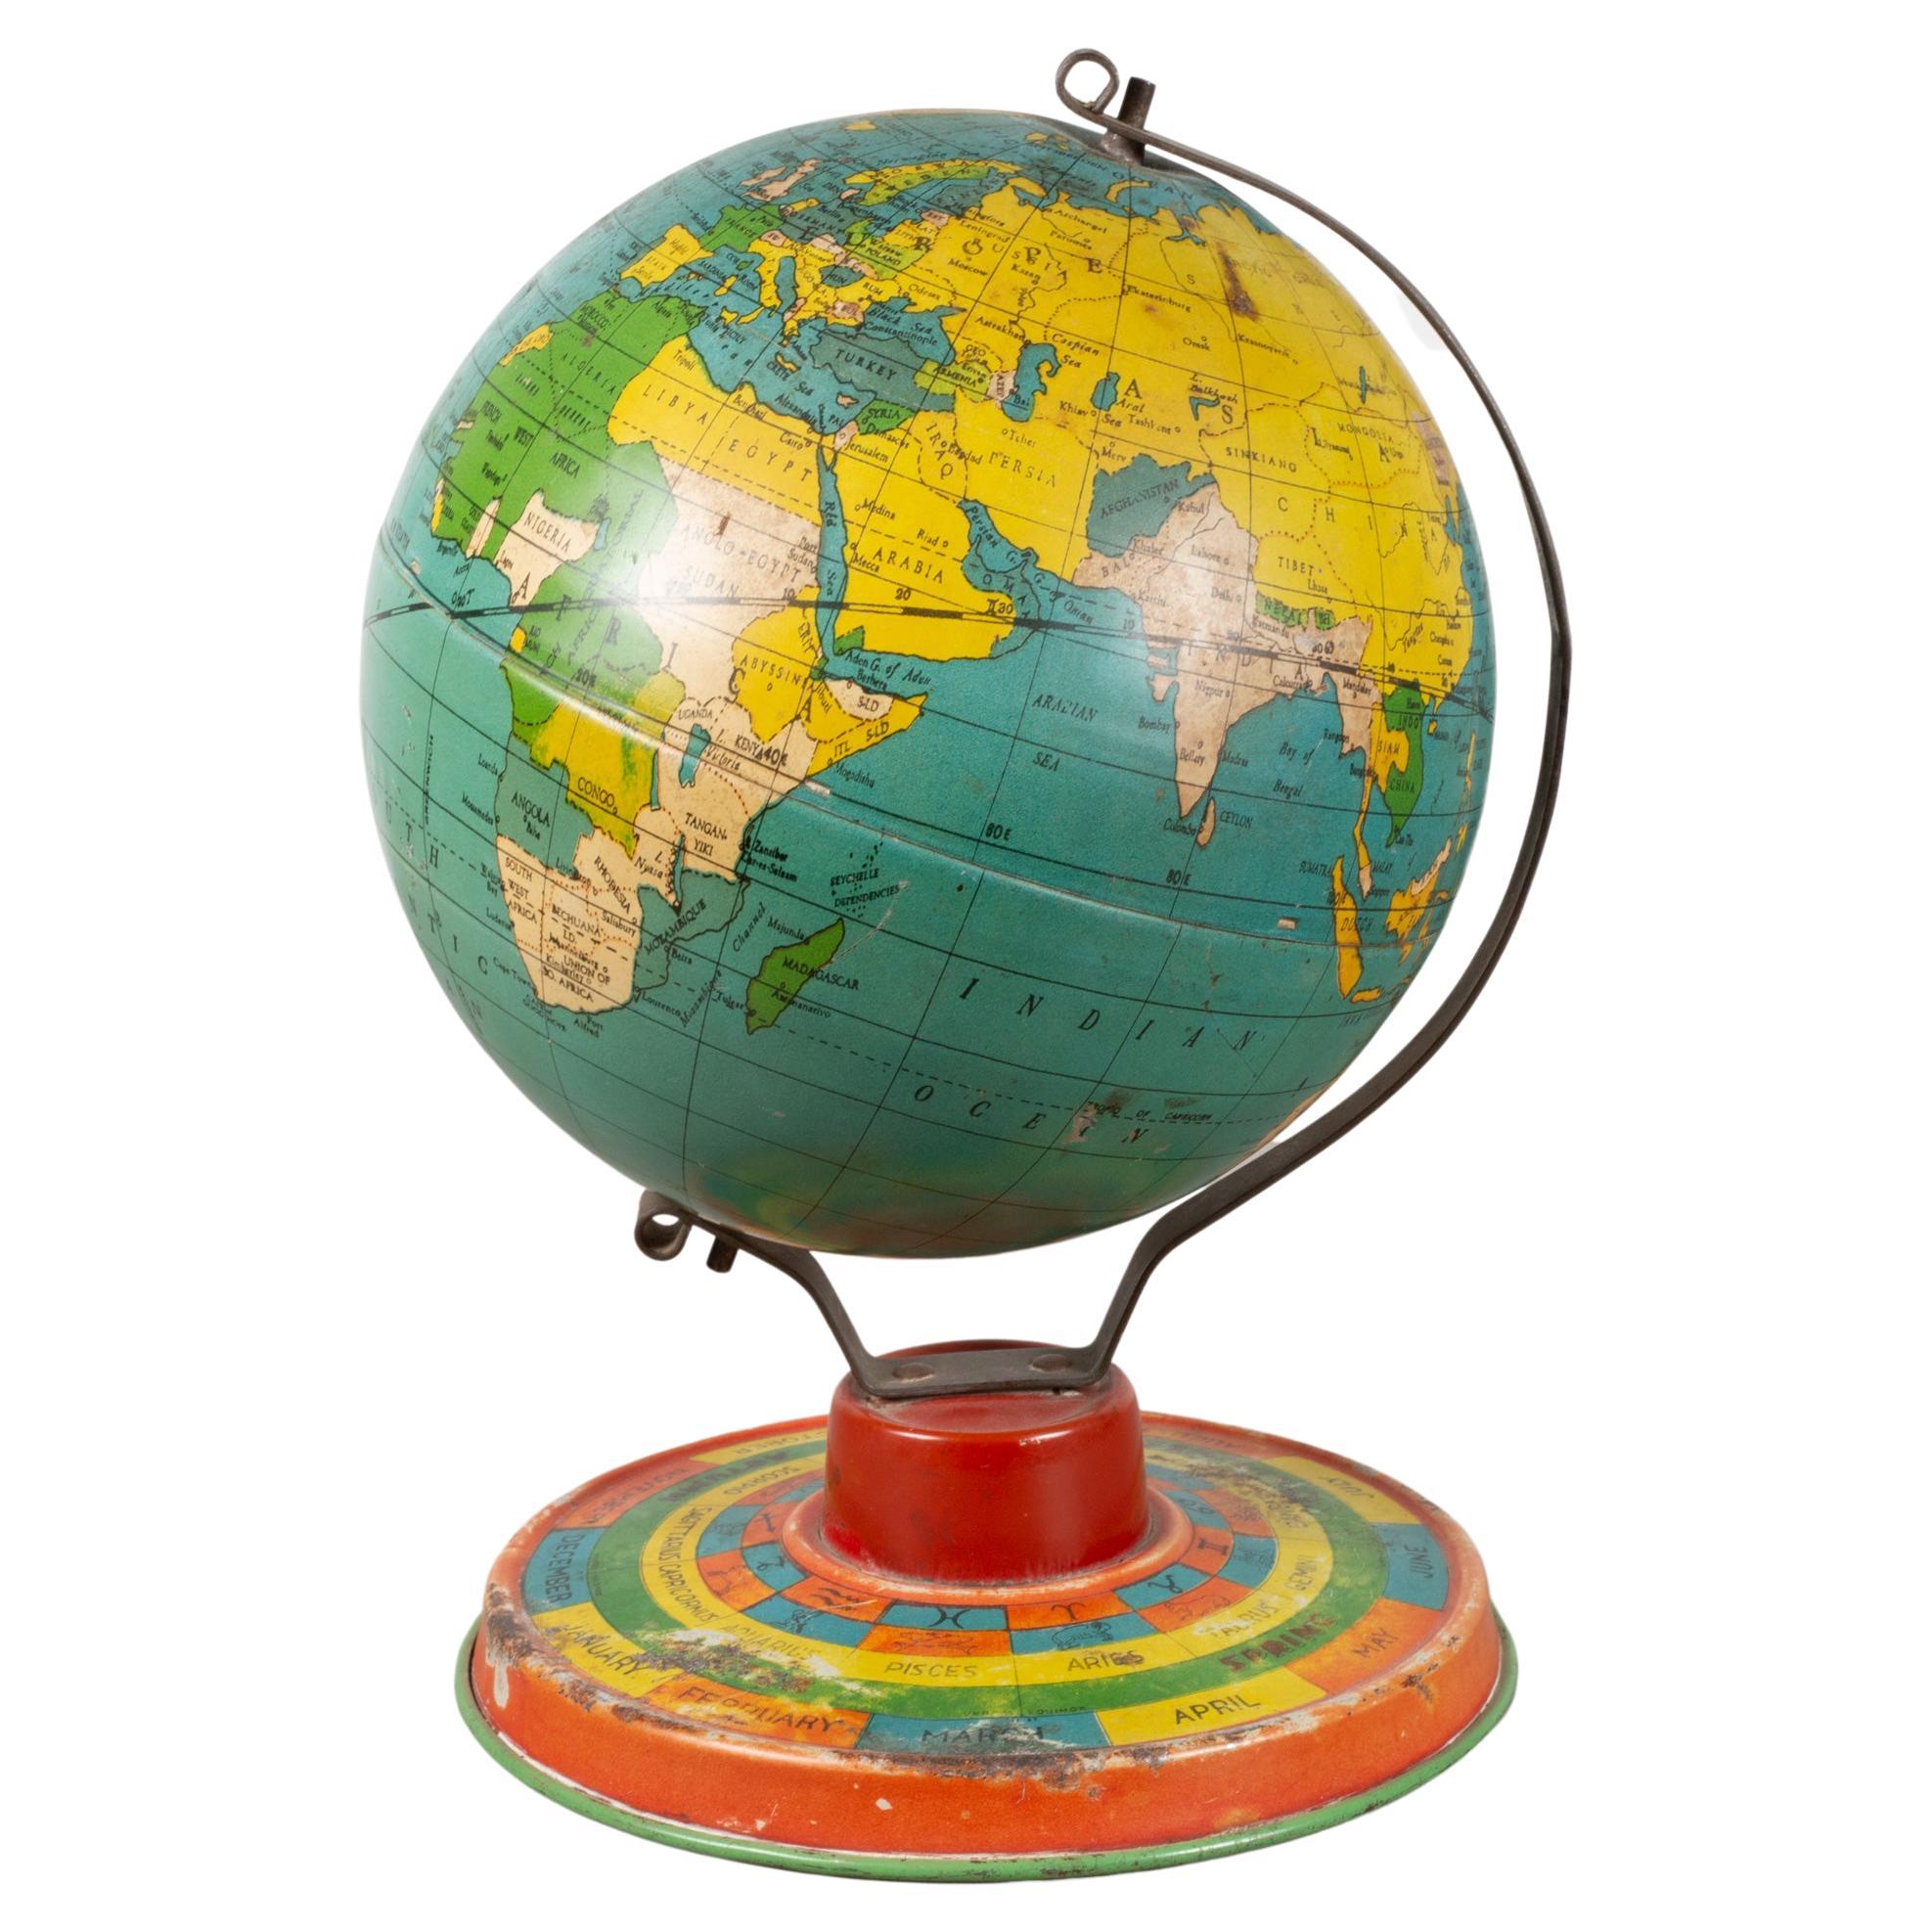 Antique Tin Litho Travel Game Globe circa 1930